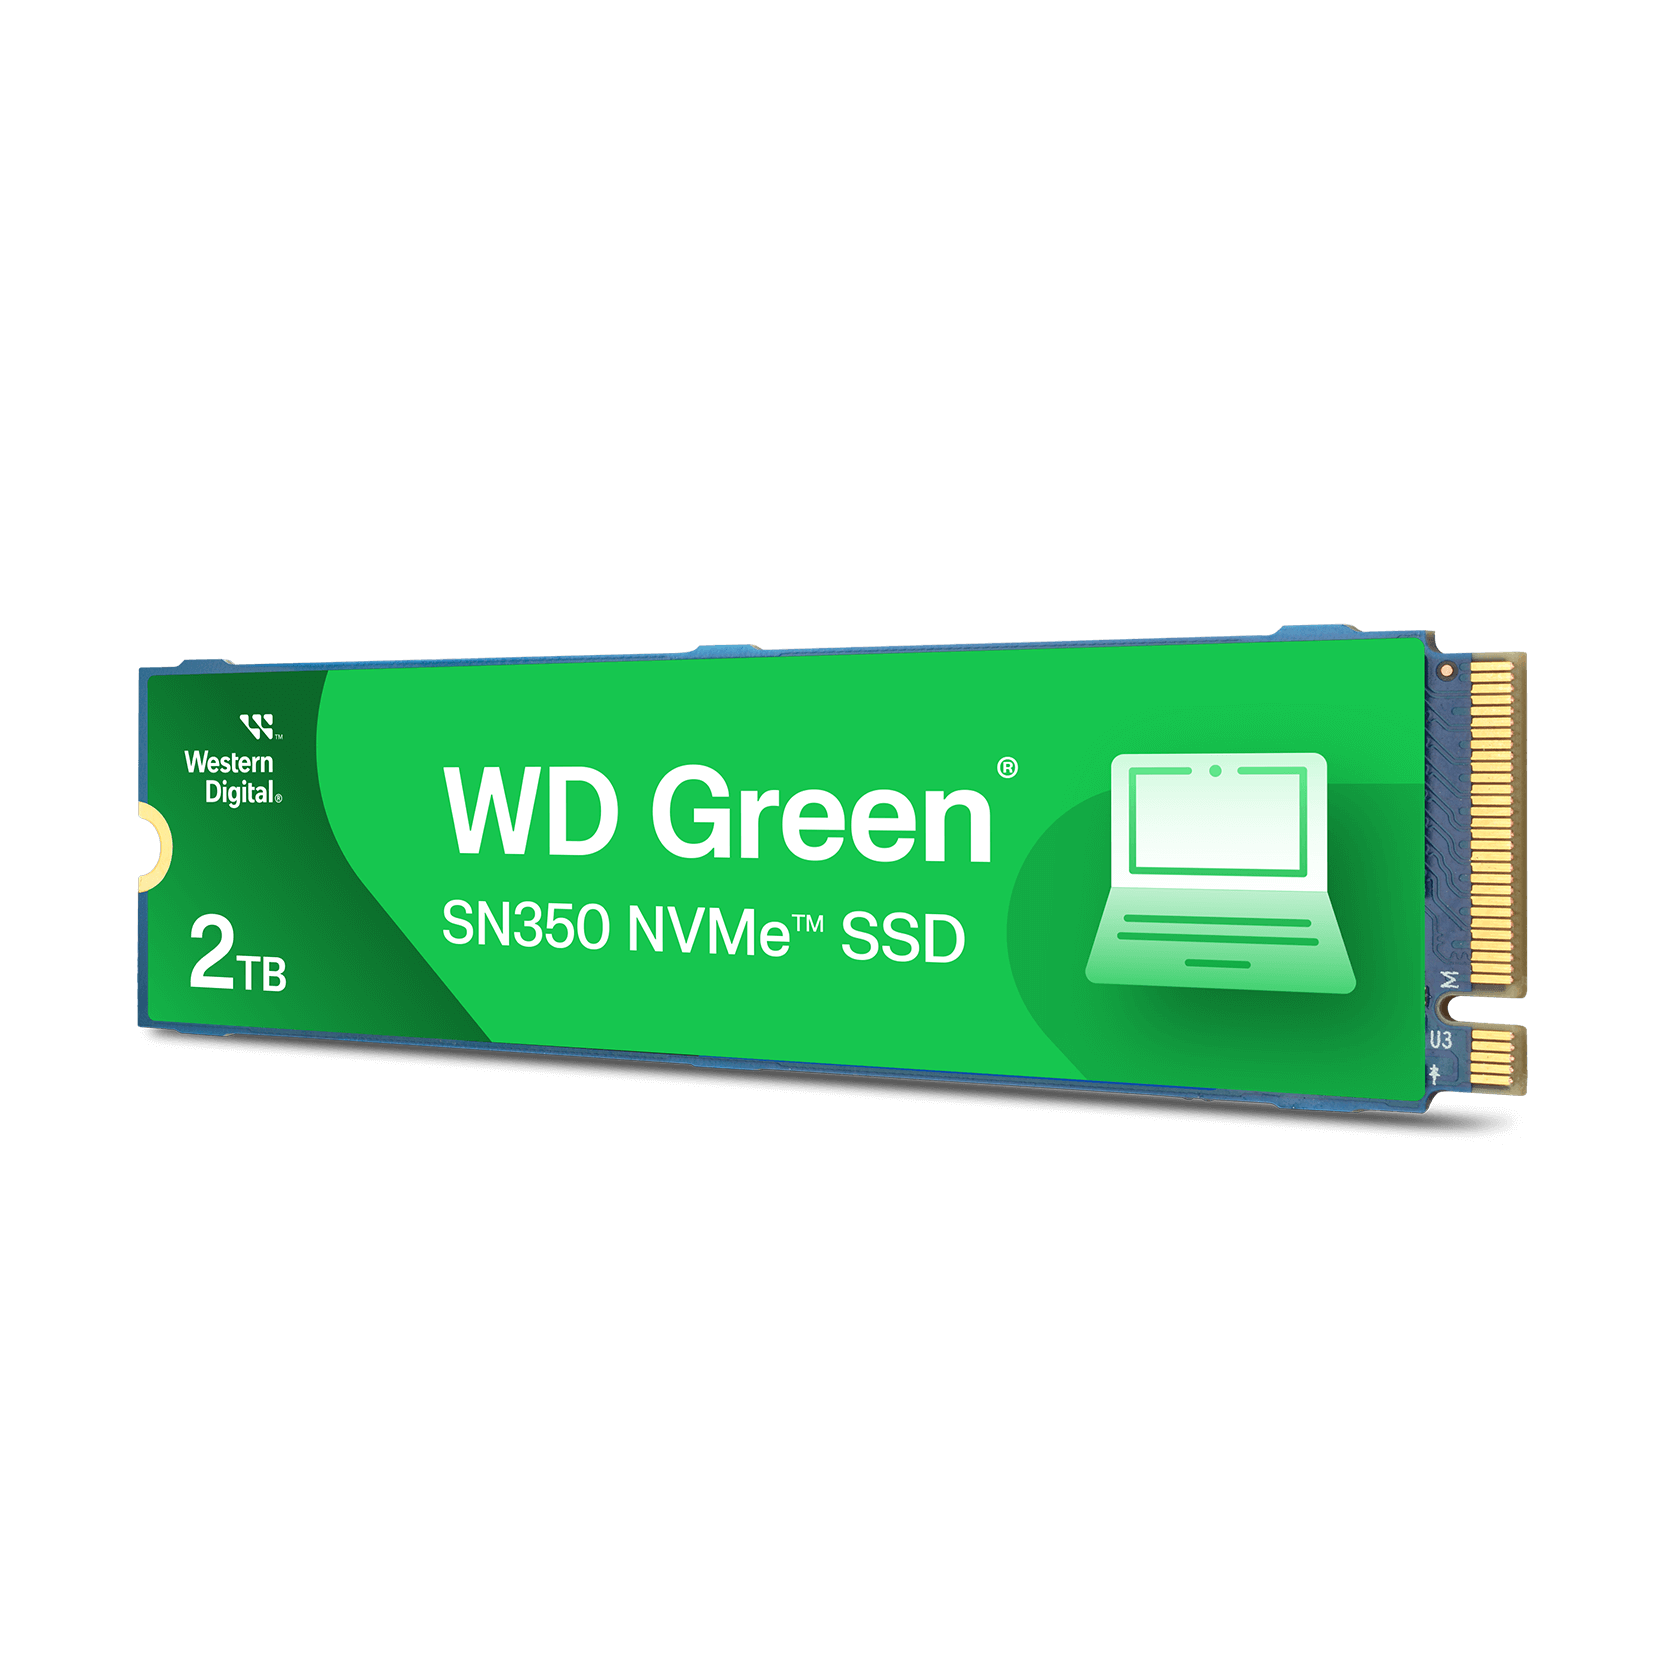 Western Digital 2TB WD Green邃｢ SN350 NVMe邃｢ SSD - WDS200T3G0C